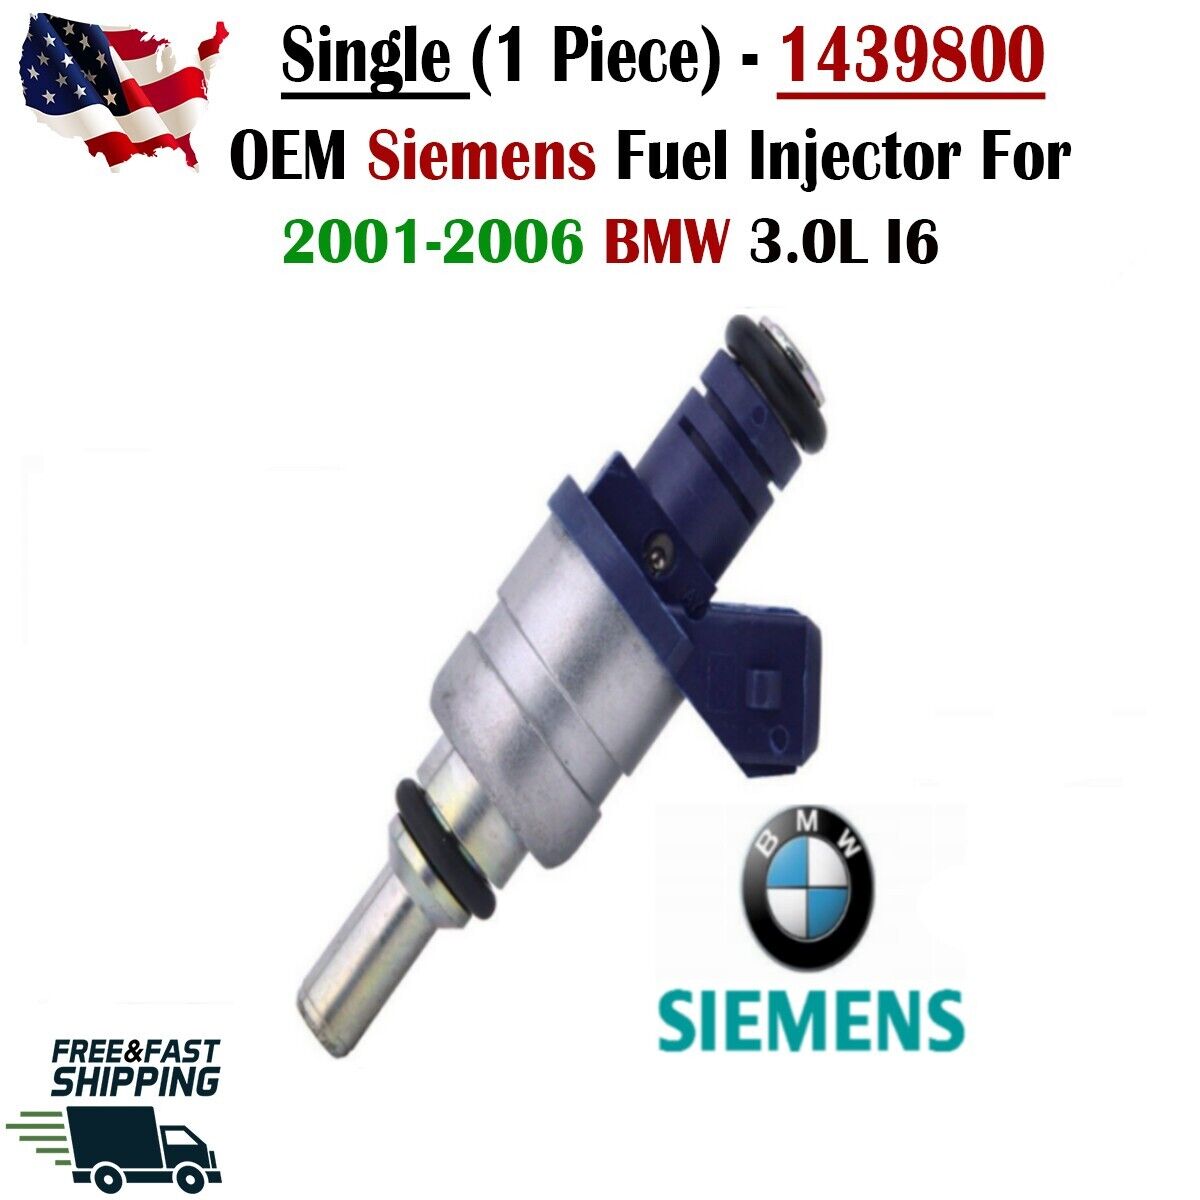 OEM Siemens x1 Fuel Injector for 2001, 2002, 2003, 2004, 2005, 2006 BMW 3.0L V6